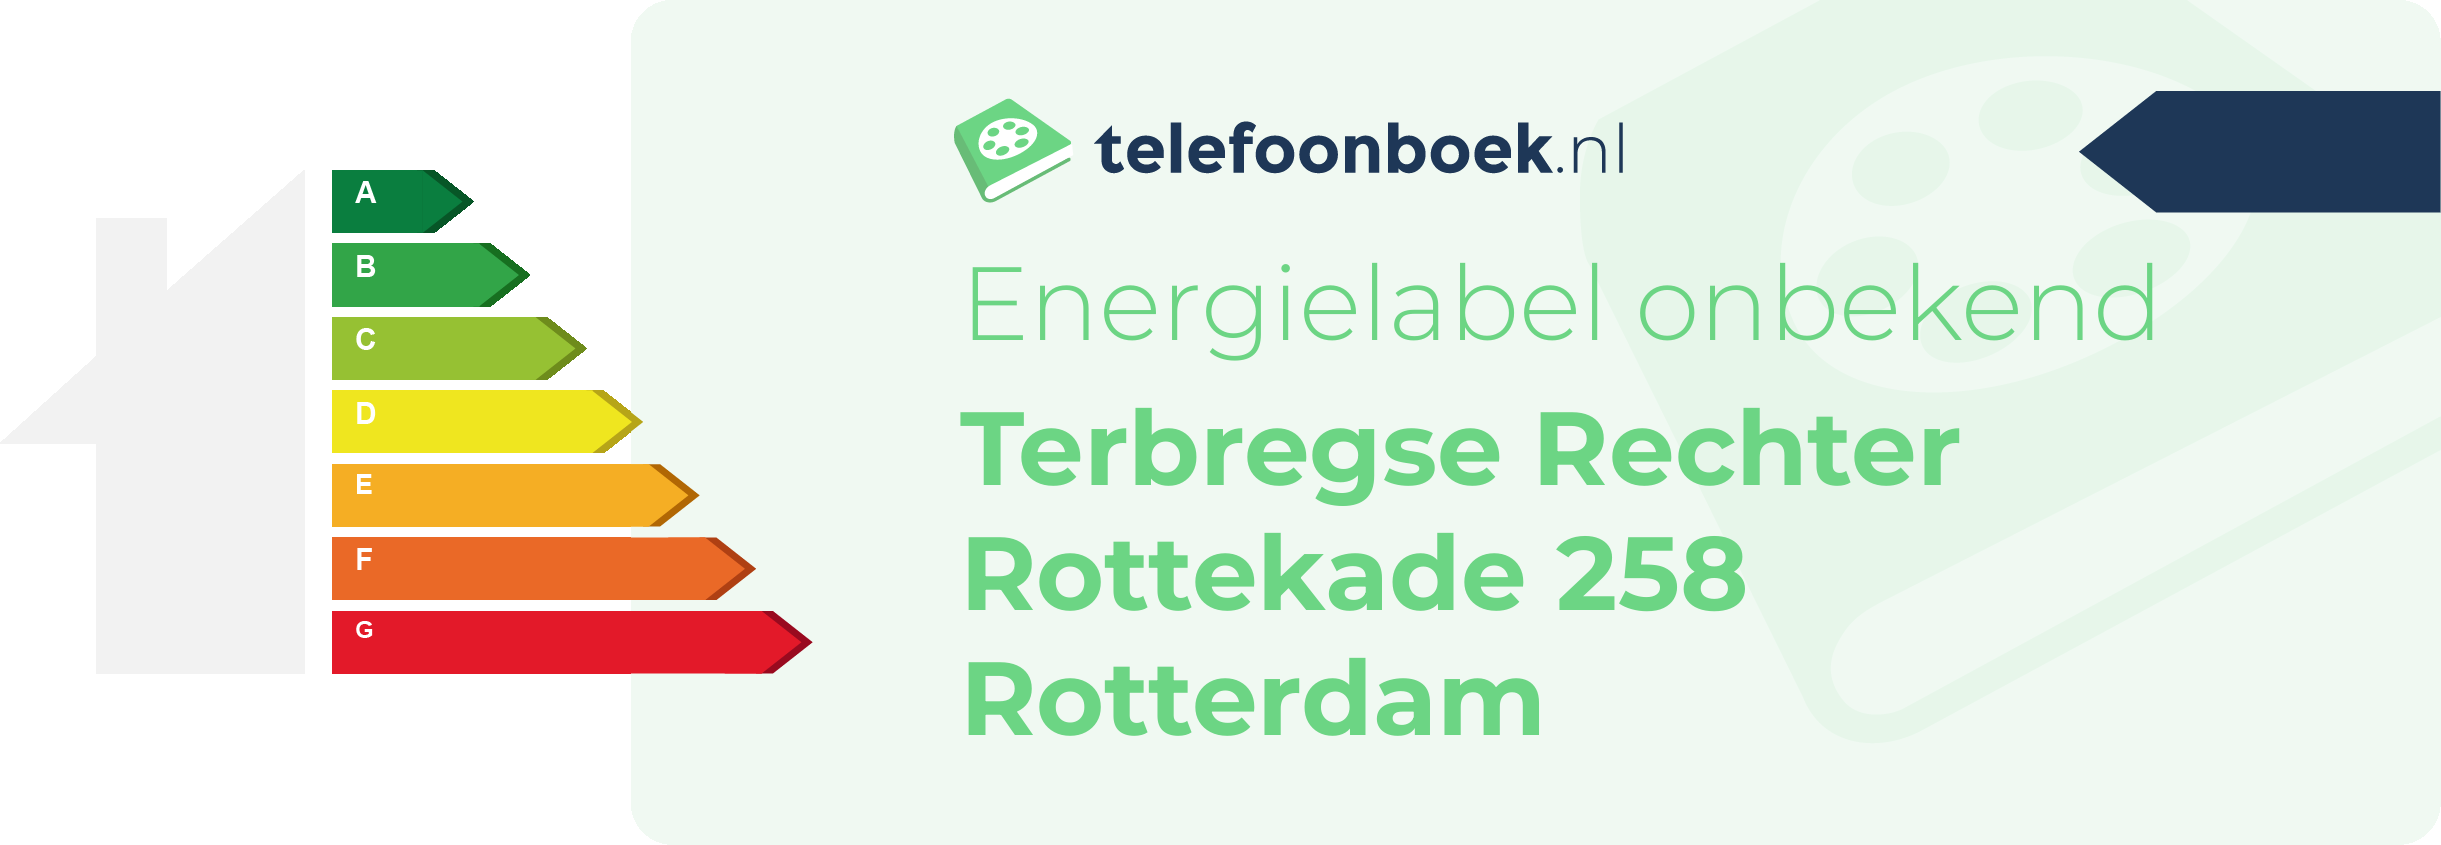 Energielabel Terbregse Rechter Rottekade 258 Rotterdam